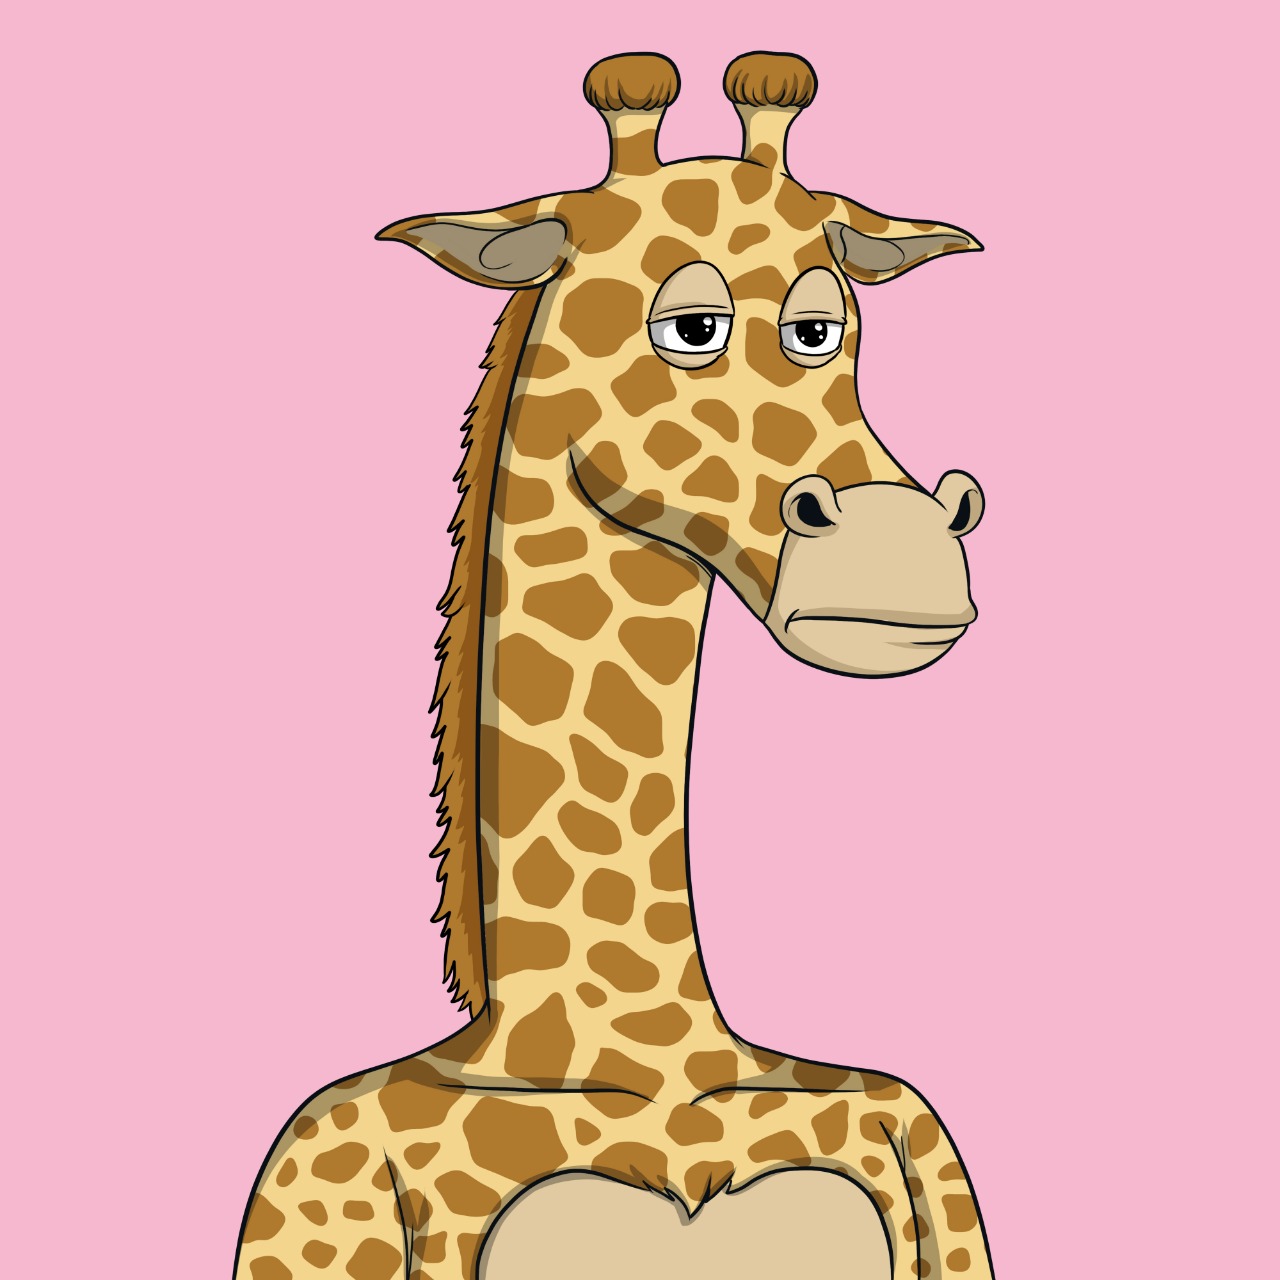 Giraffes Zoola club - Collection | OpenSea